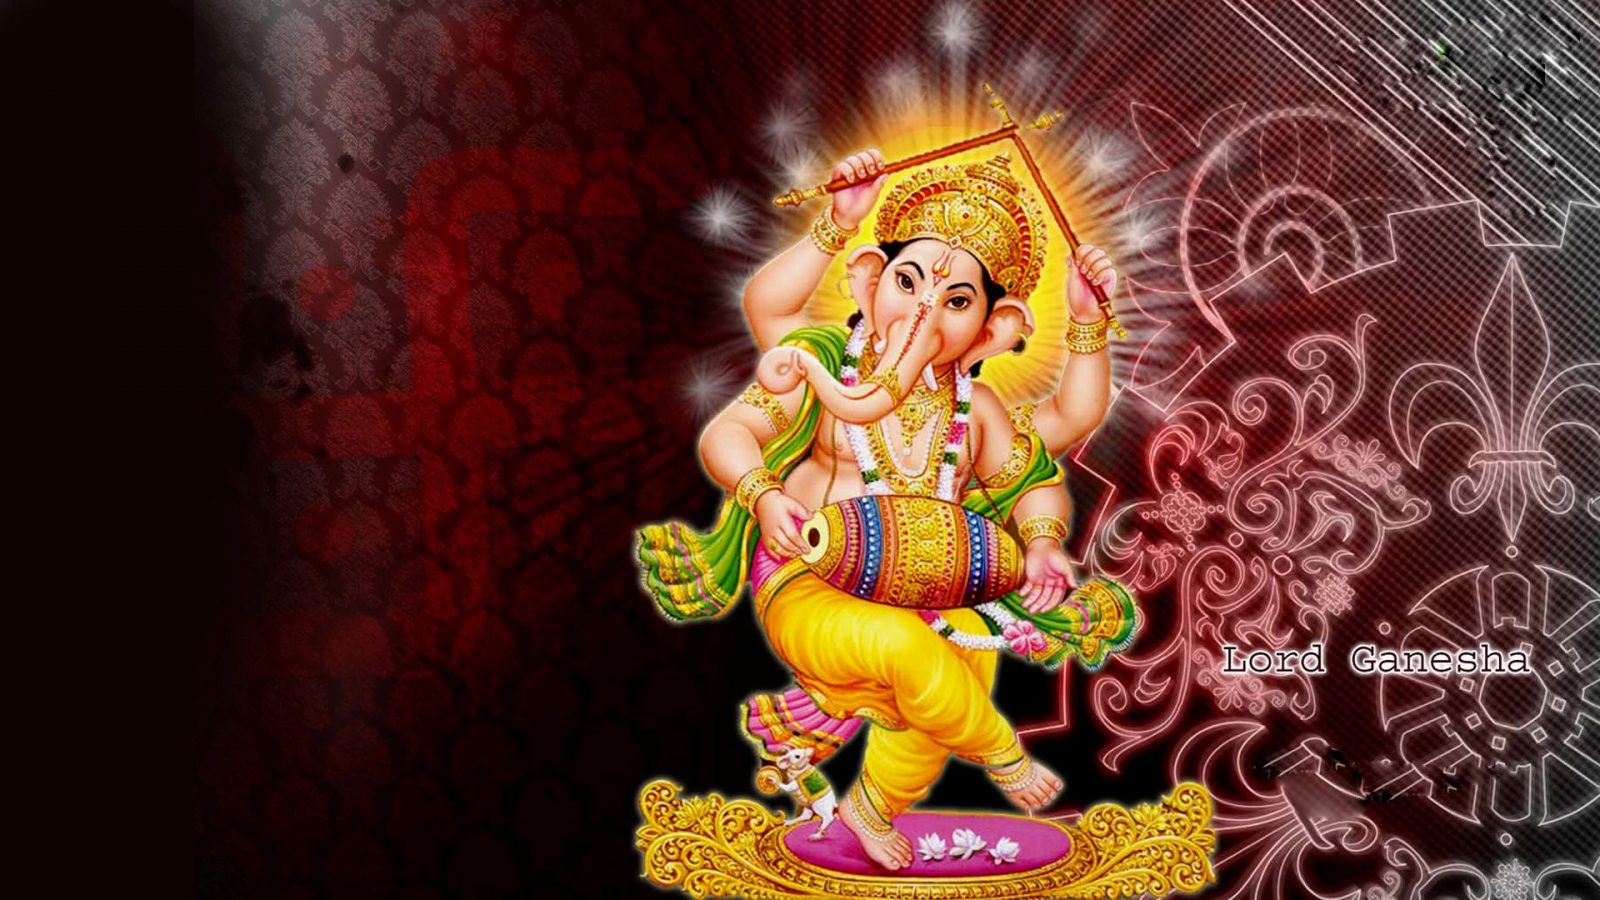 Lord Ganesha Indian God HD Desktop Wallpaper - Download hd ...